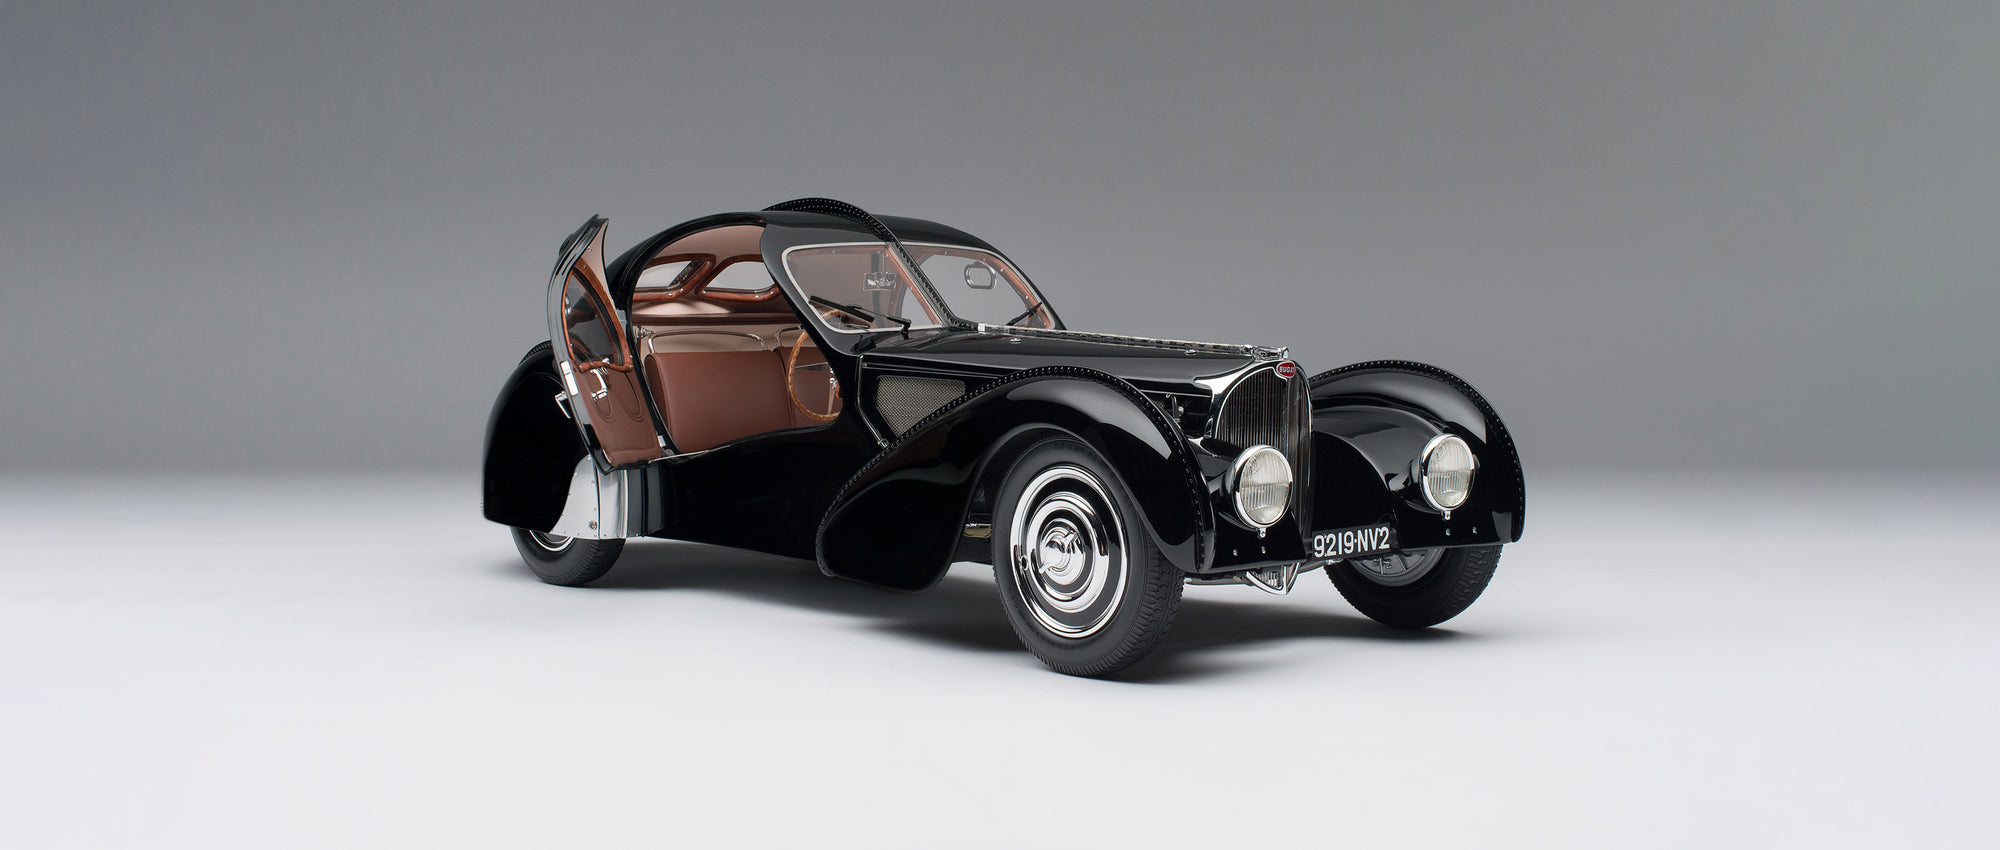 Bugatti 57SC Atlantic (1936) "La Voiture Noire"